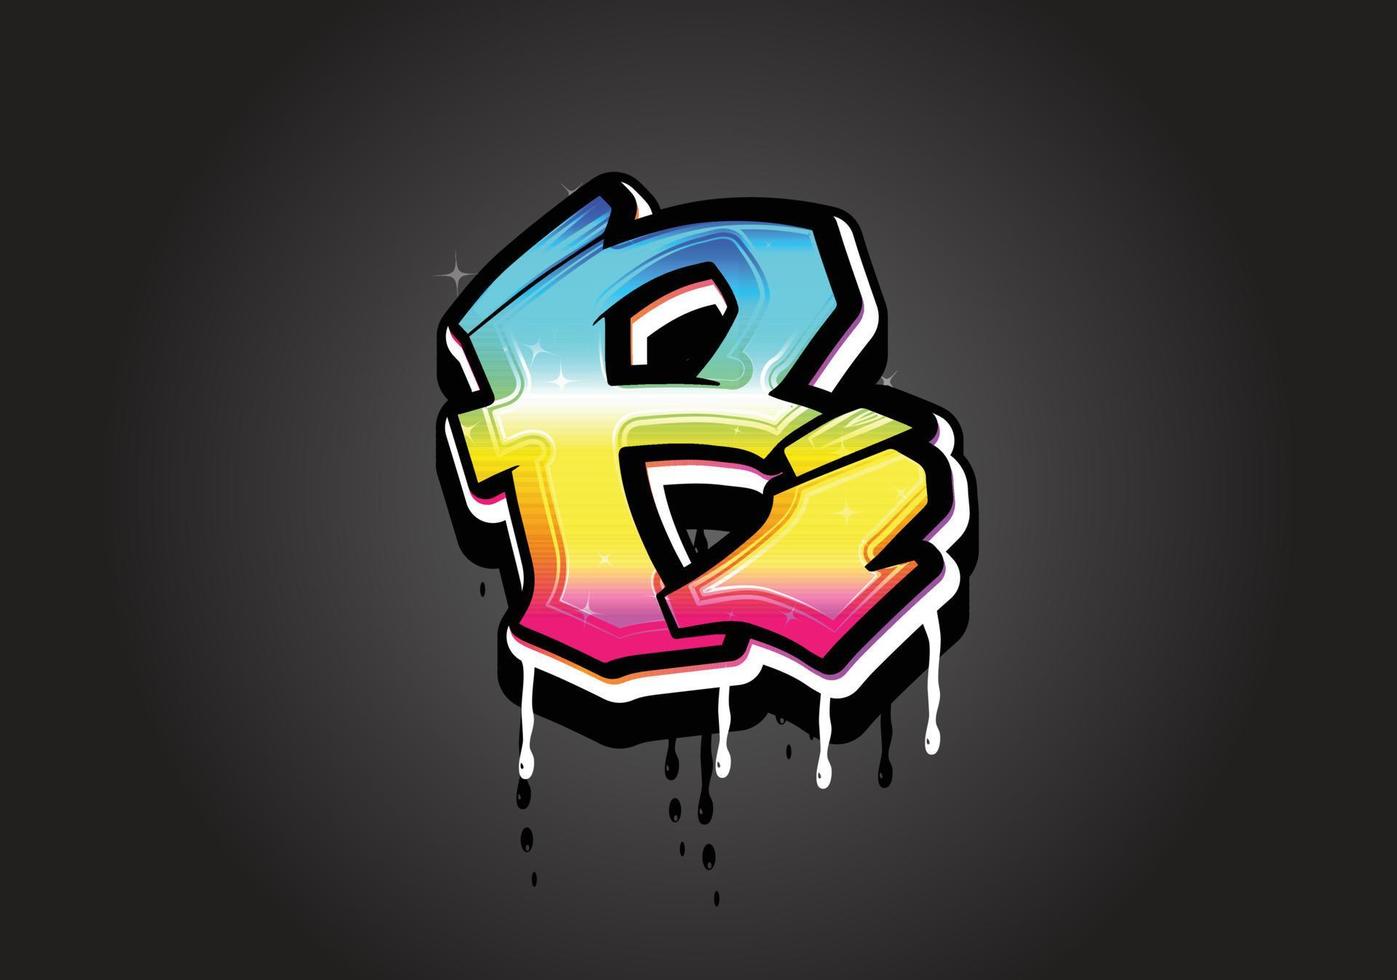 R letter 3D Graffiti Dripping  alphabet font vector